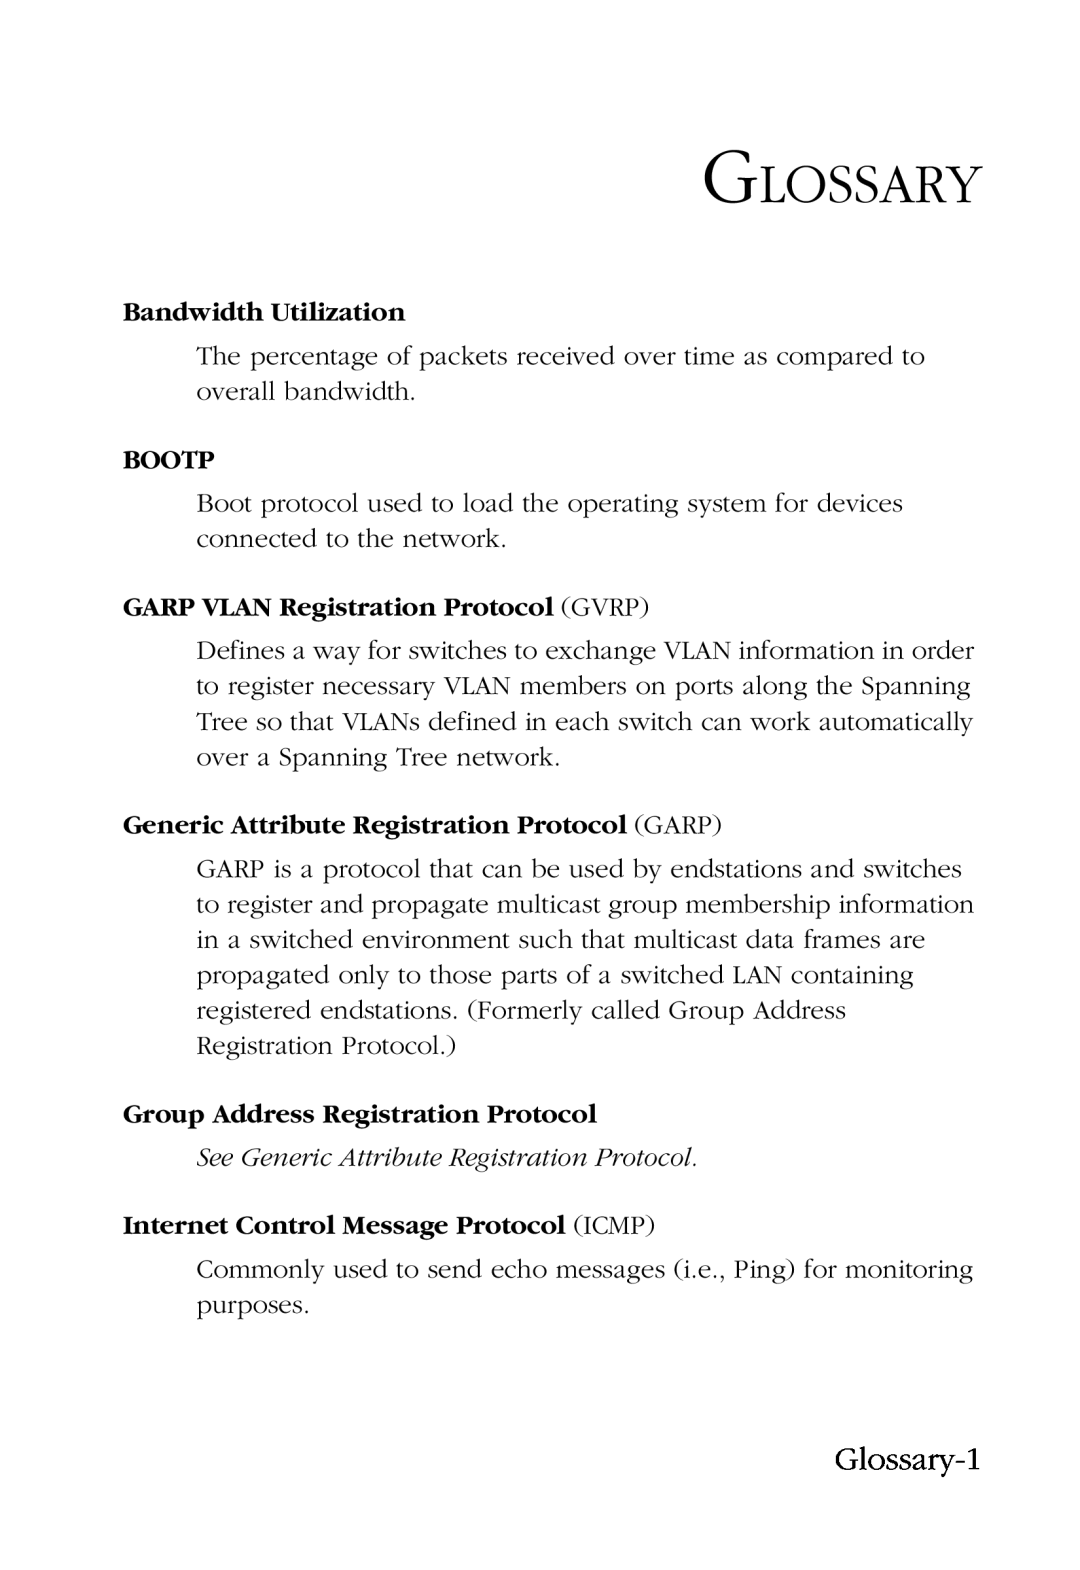 SMC Networks SMC6924VF manual Glossary-1, Bandwidth Utilization, Bootp, GARP VLAN Registration Protocol GVRP 